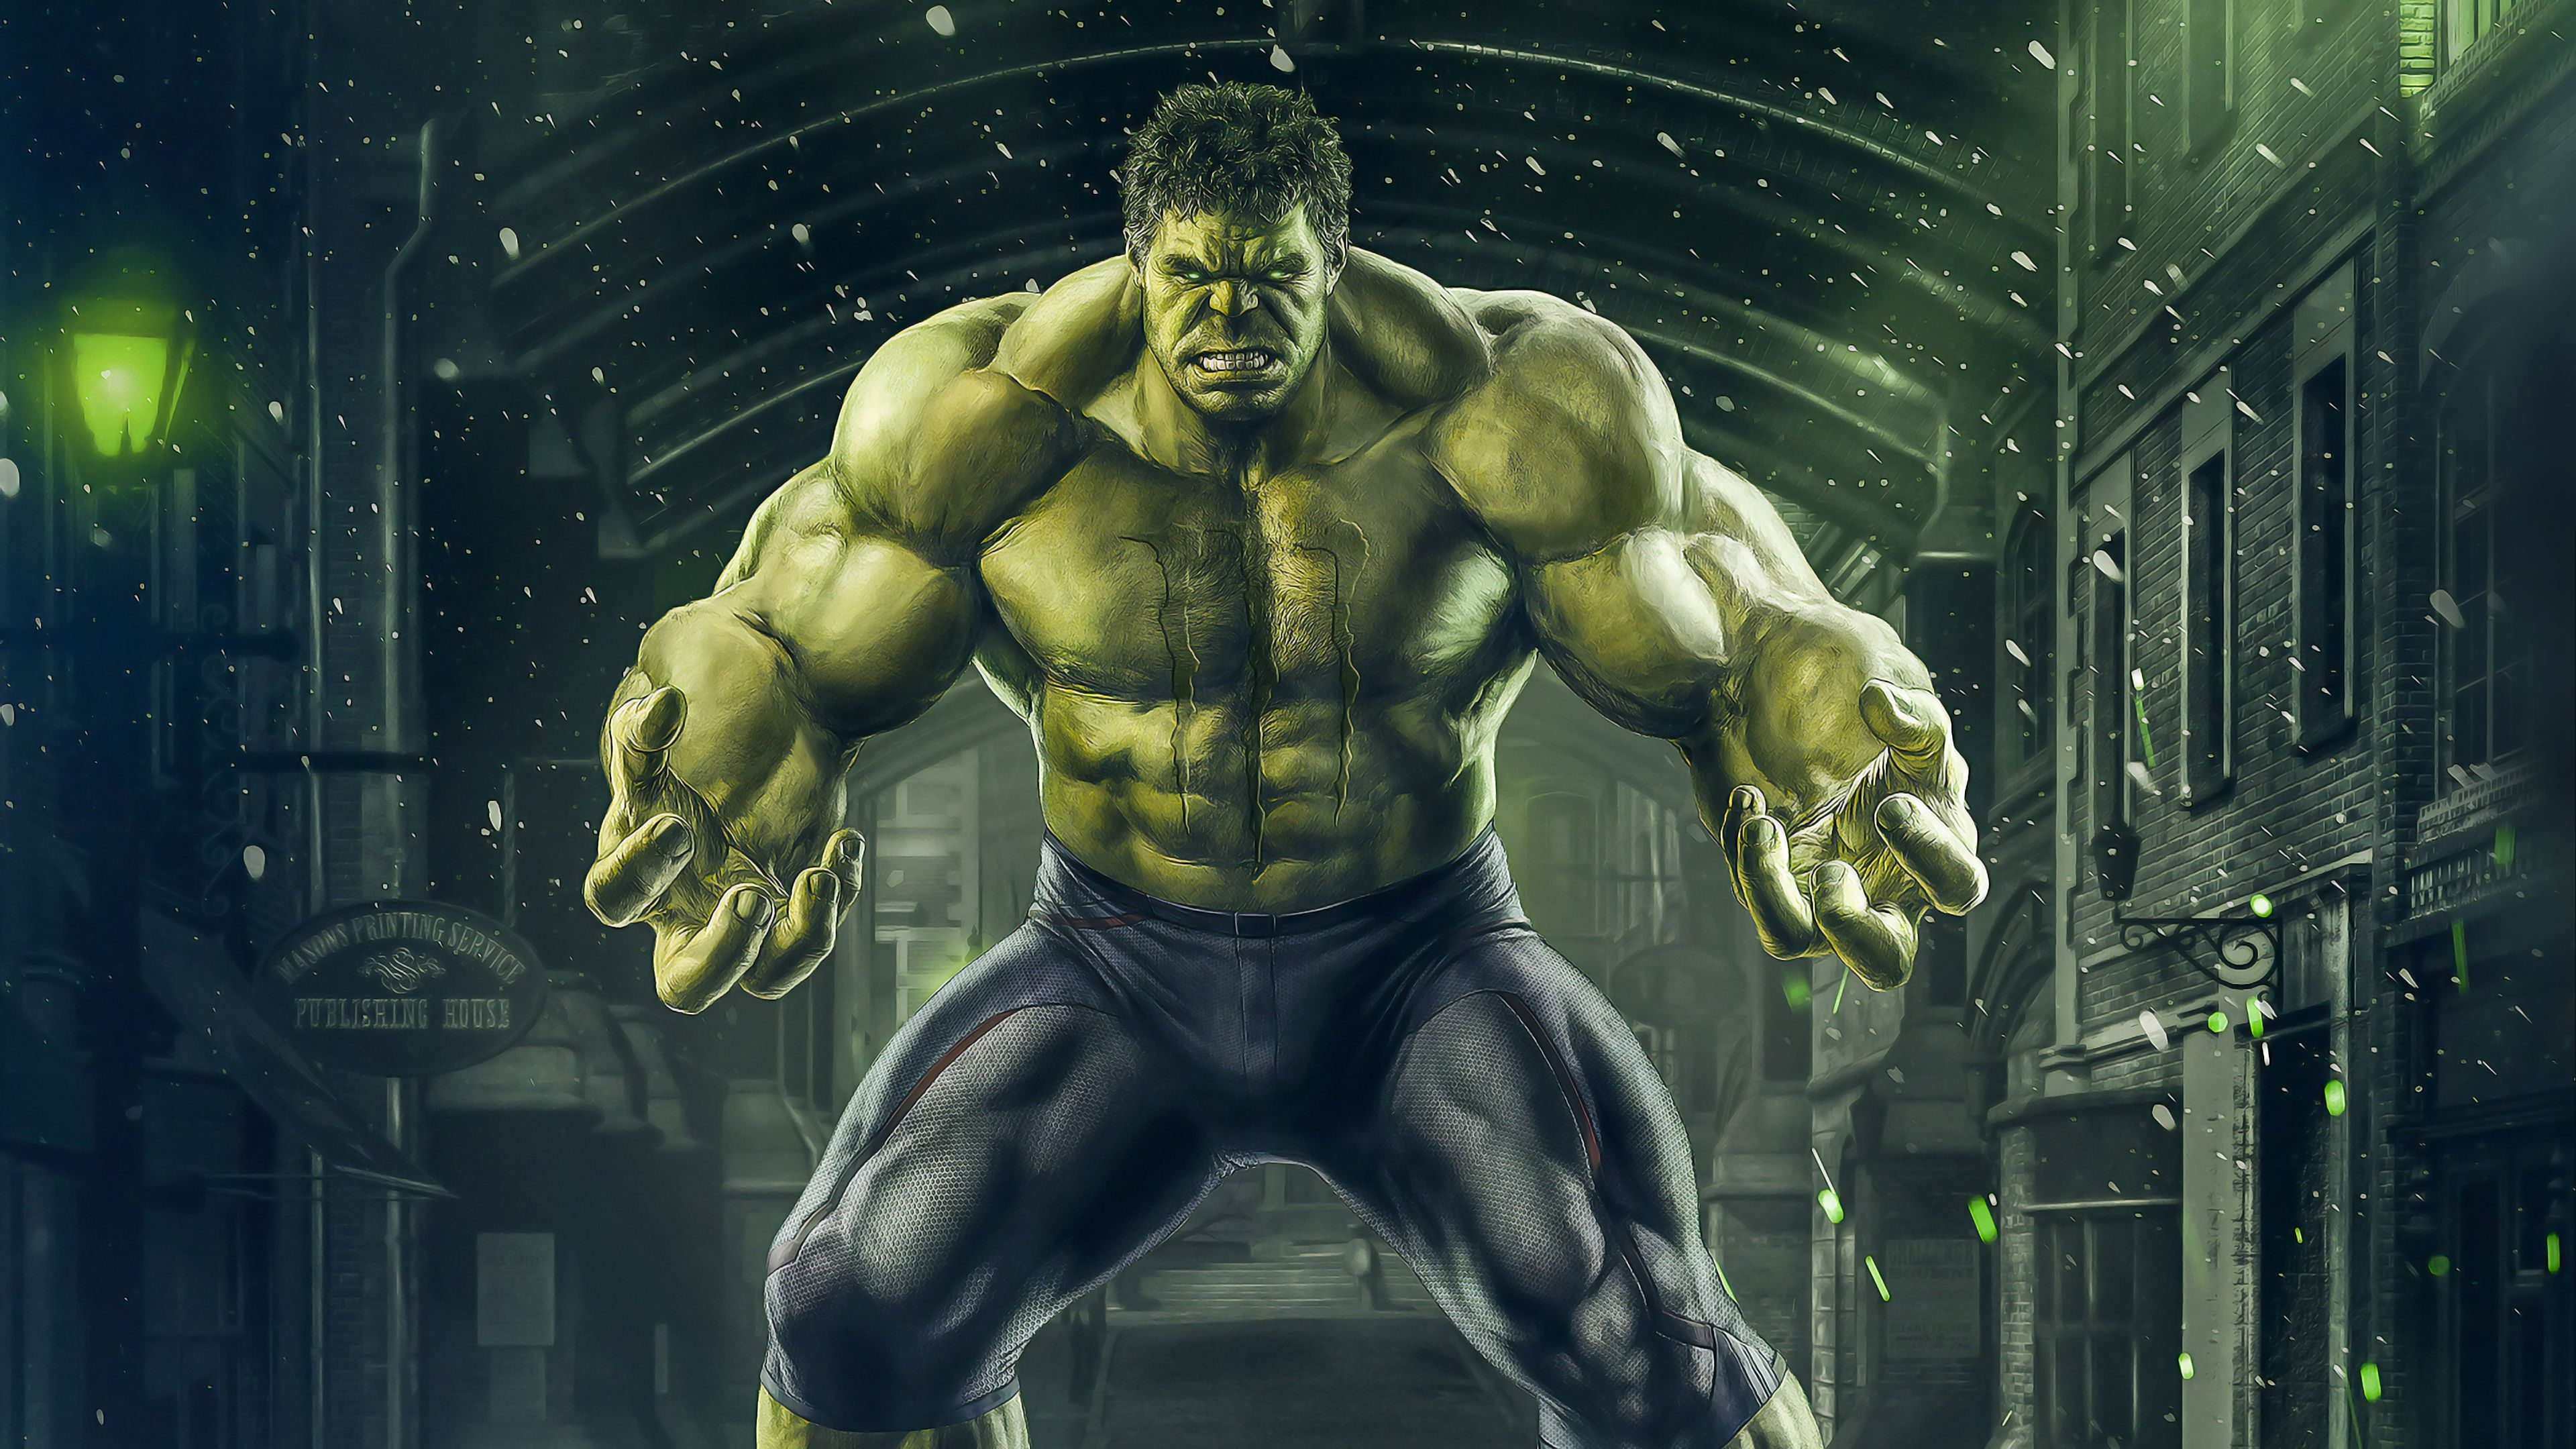 Hulk The Beast 4k superheroes .com